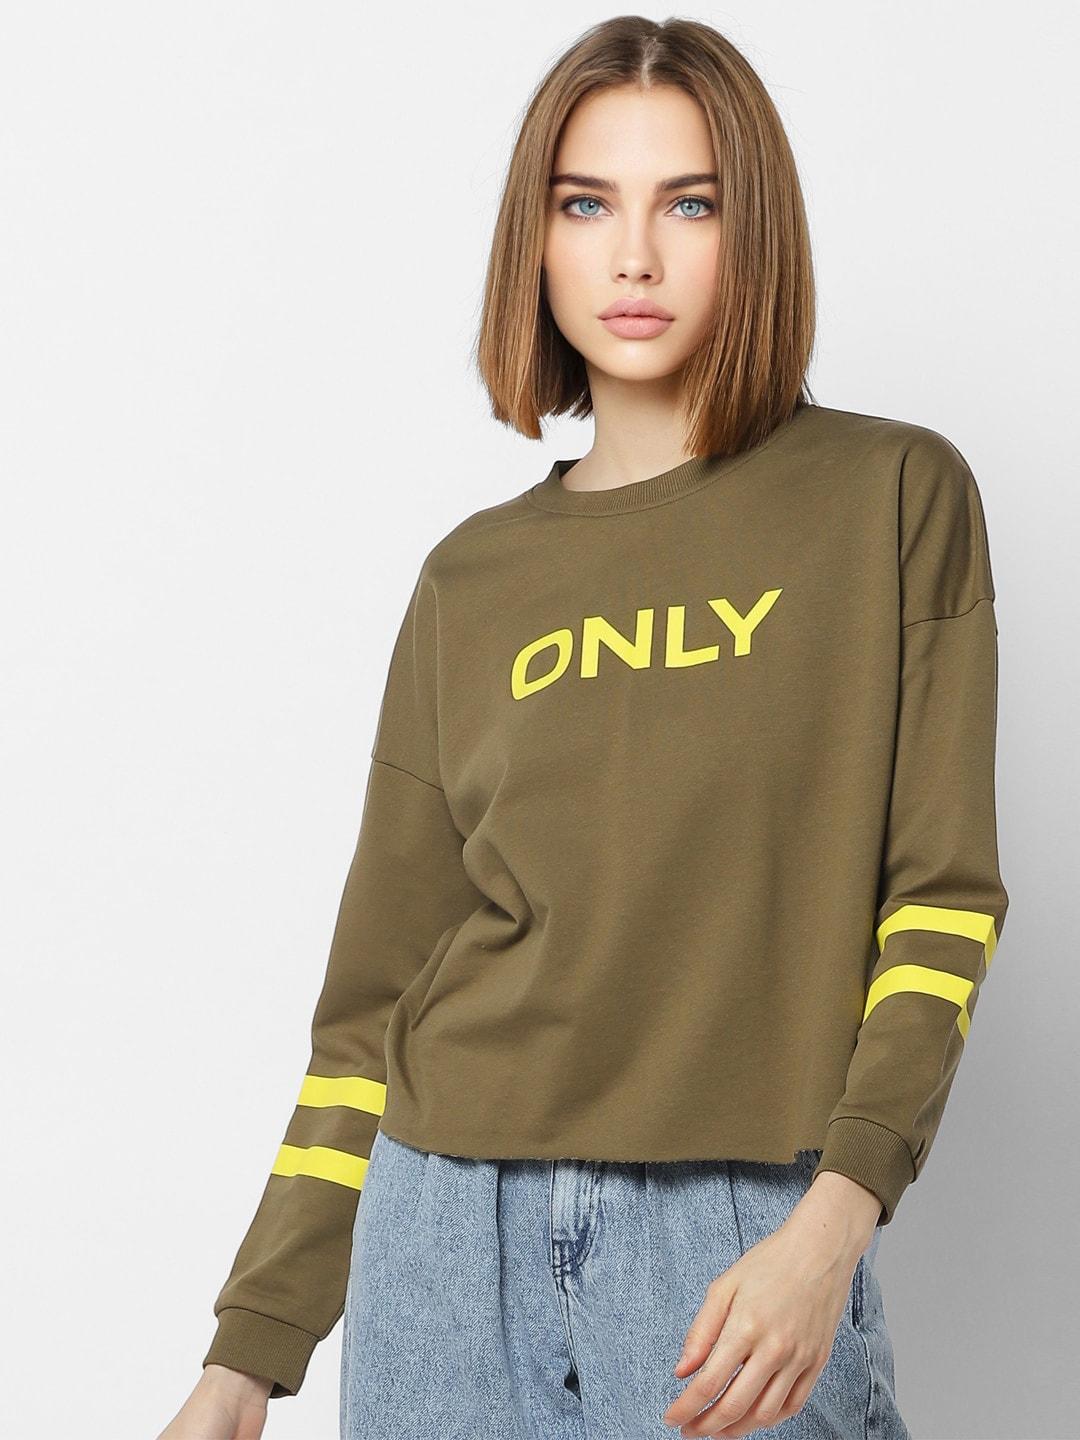 ONLY Women Brand Logo Printed Cotton Sweatshirt